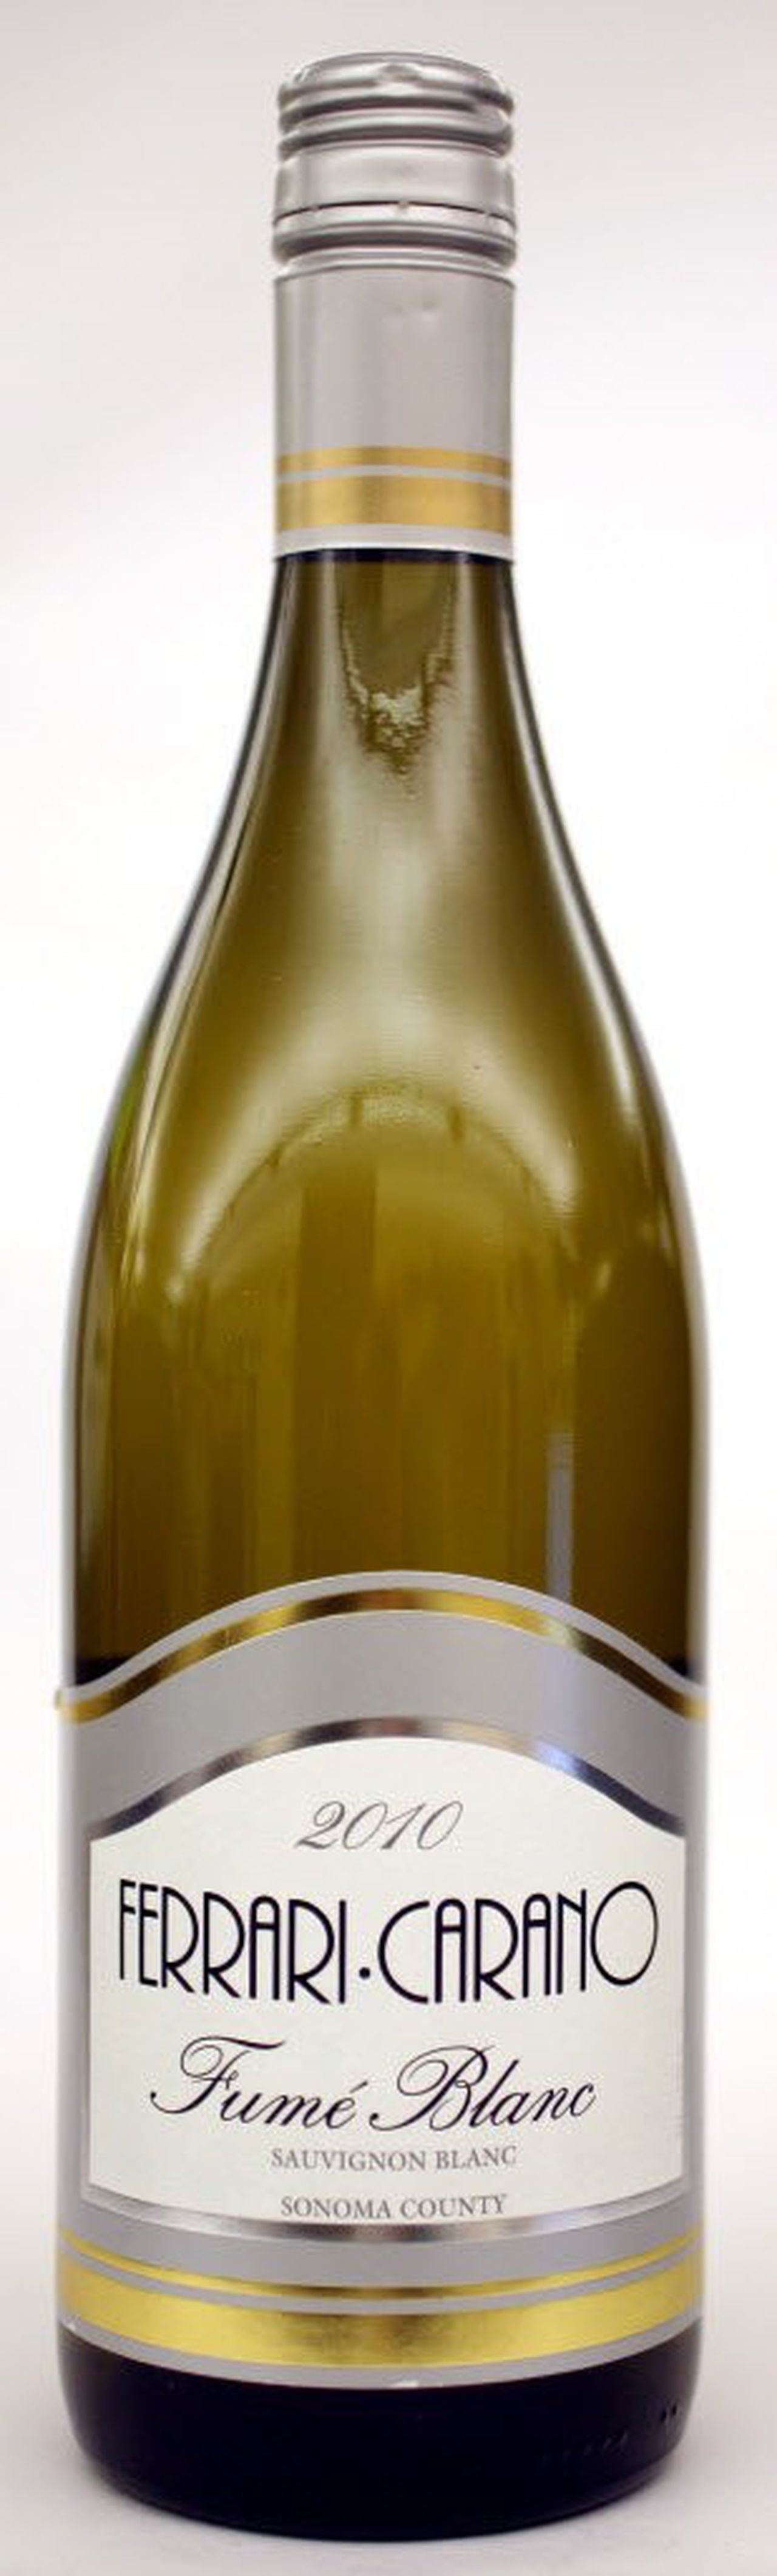 Ferrari-Carano Fume Blanc 2010: Wine Buy of the Week - cleveland.com